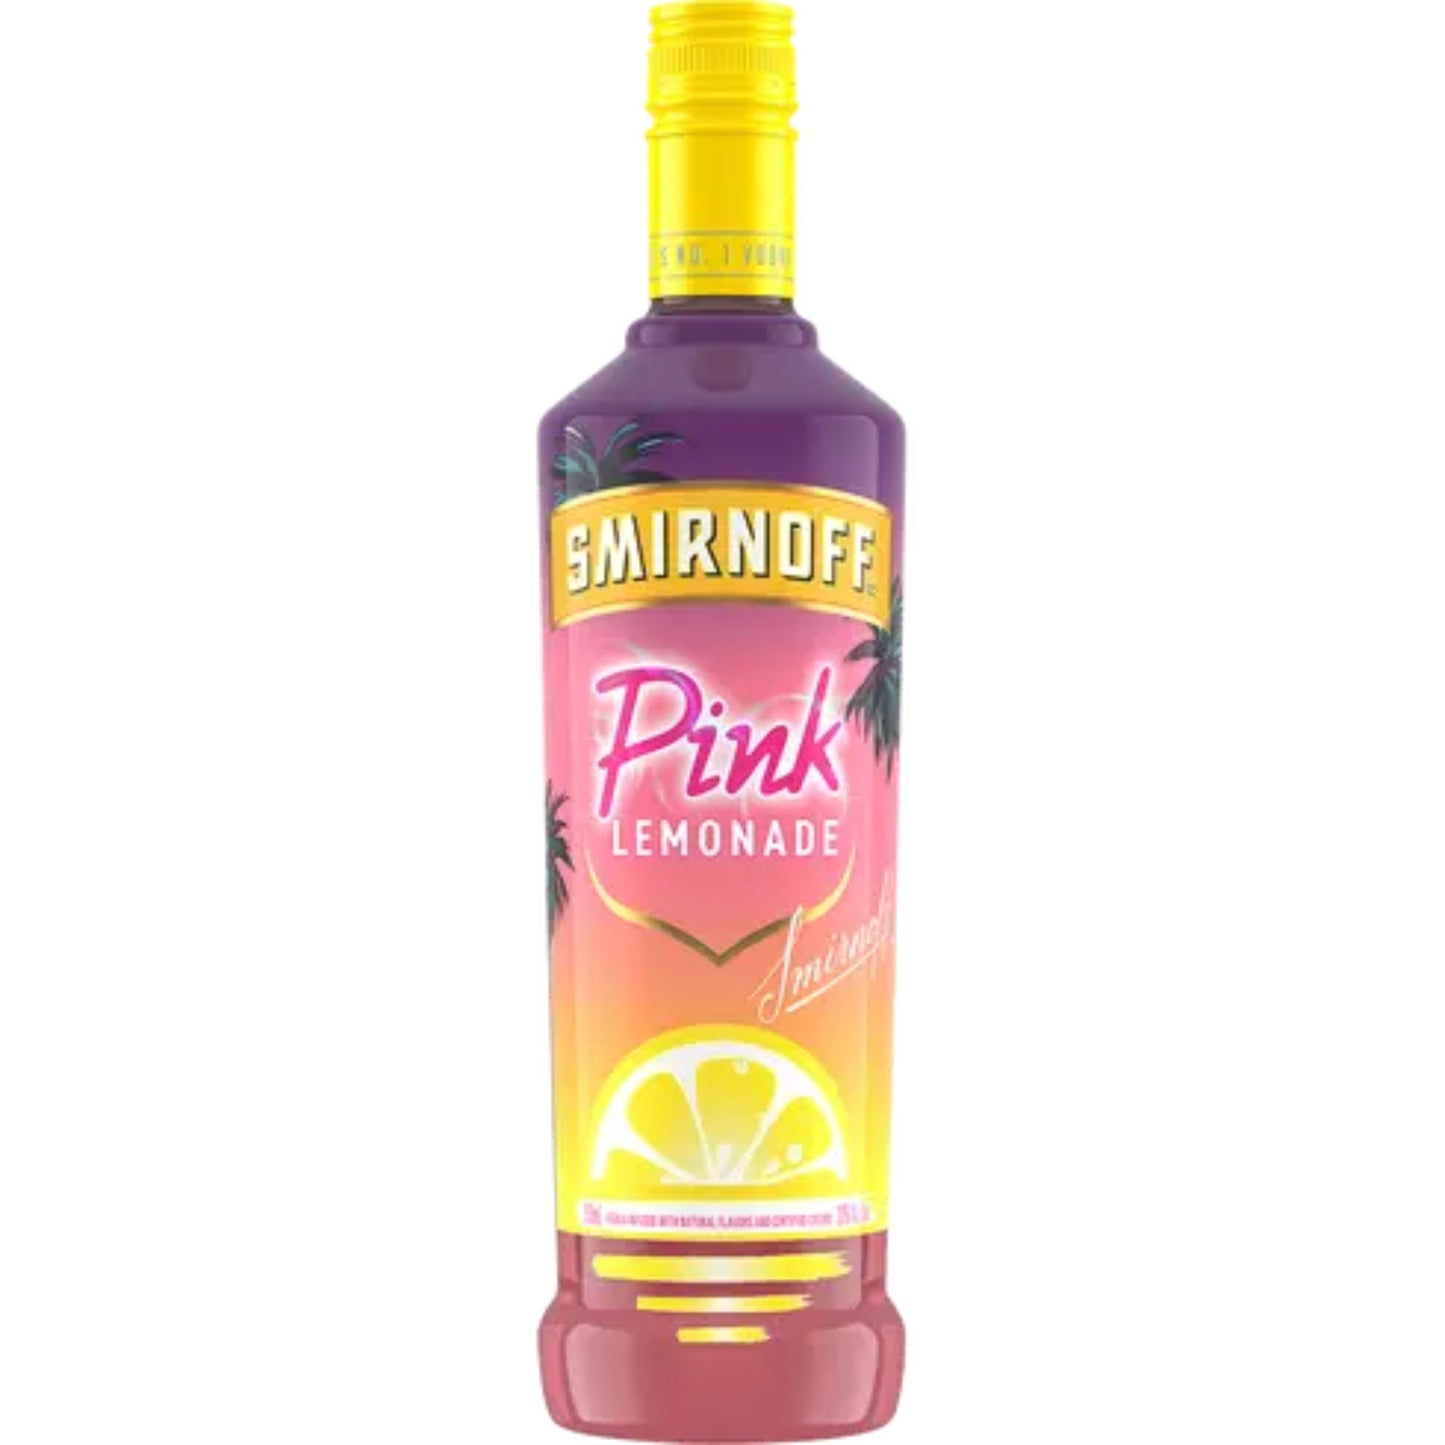 Smirnoff Pink Lemonade Vodka - Liquor Geeks